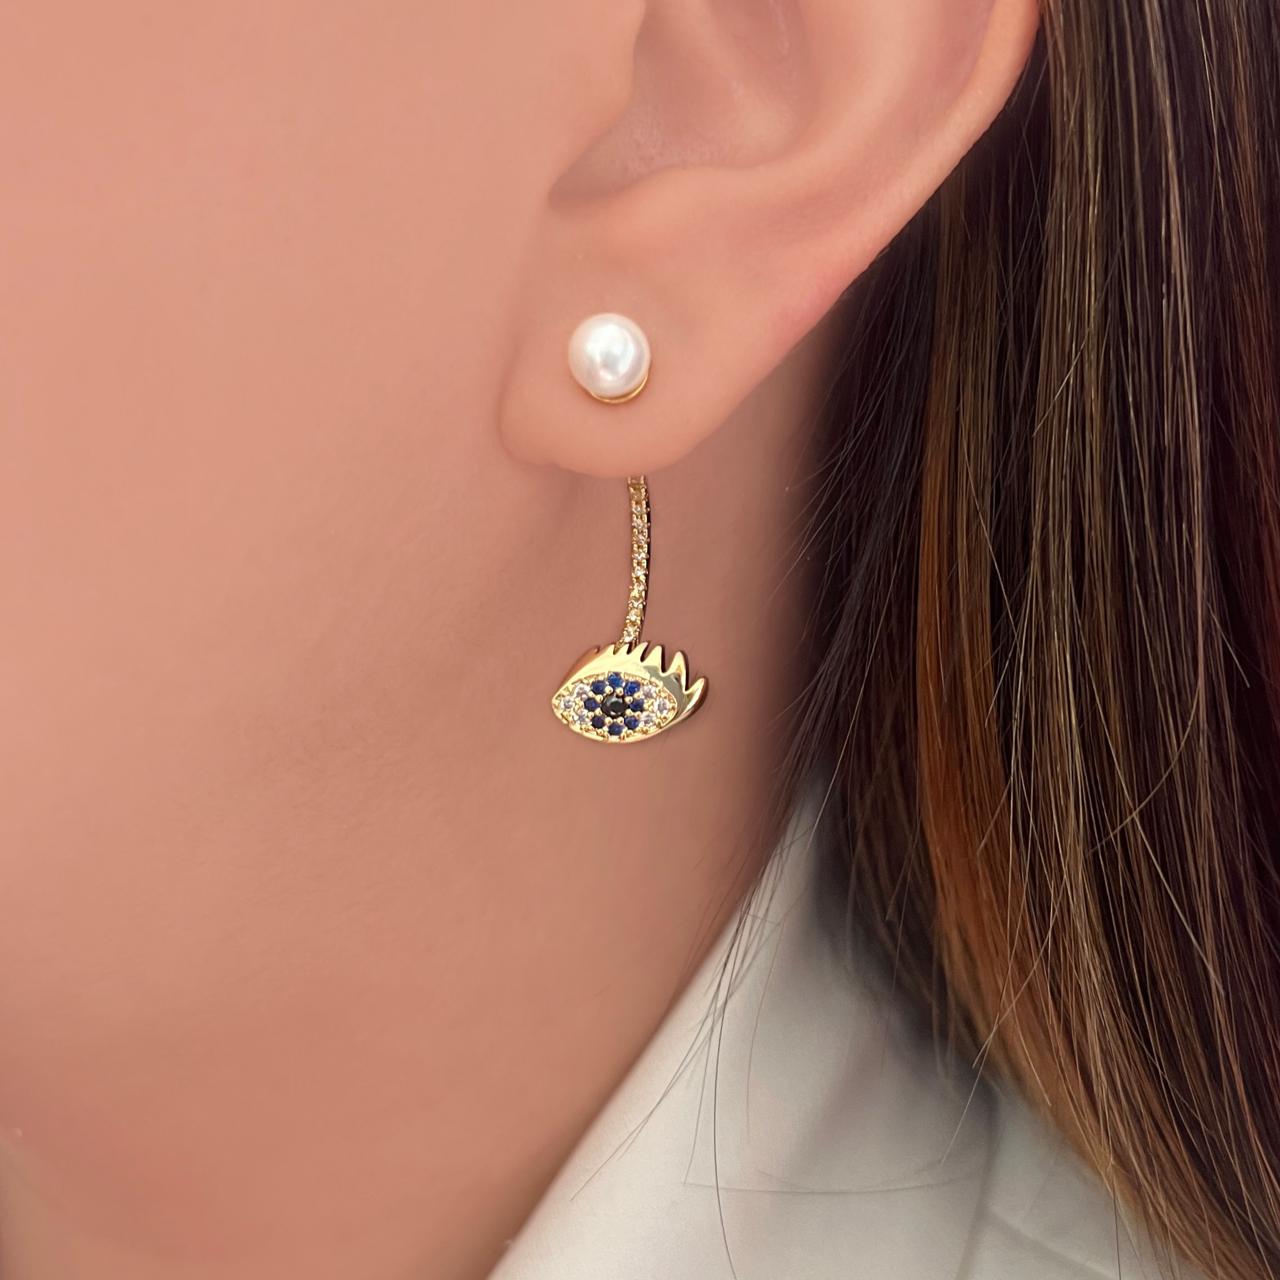 Pearl earring with eye (716)